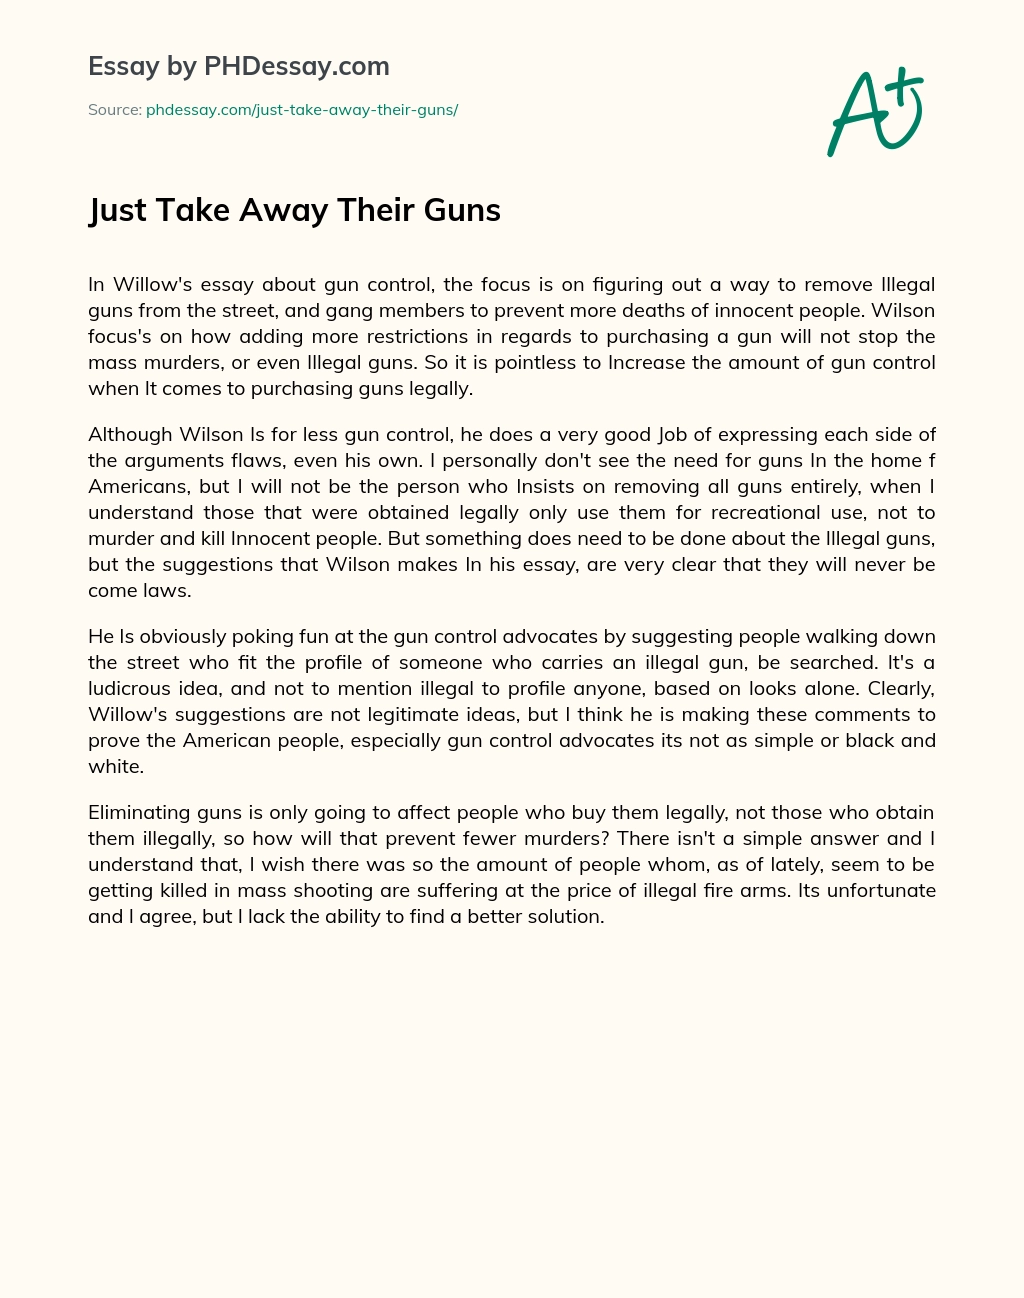 Just Take Away Their Guns essay